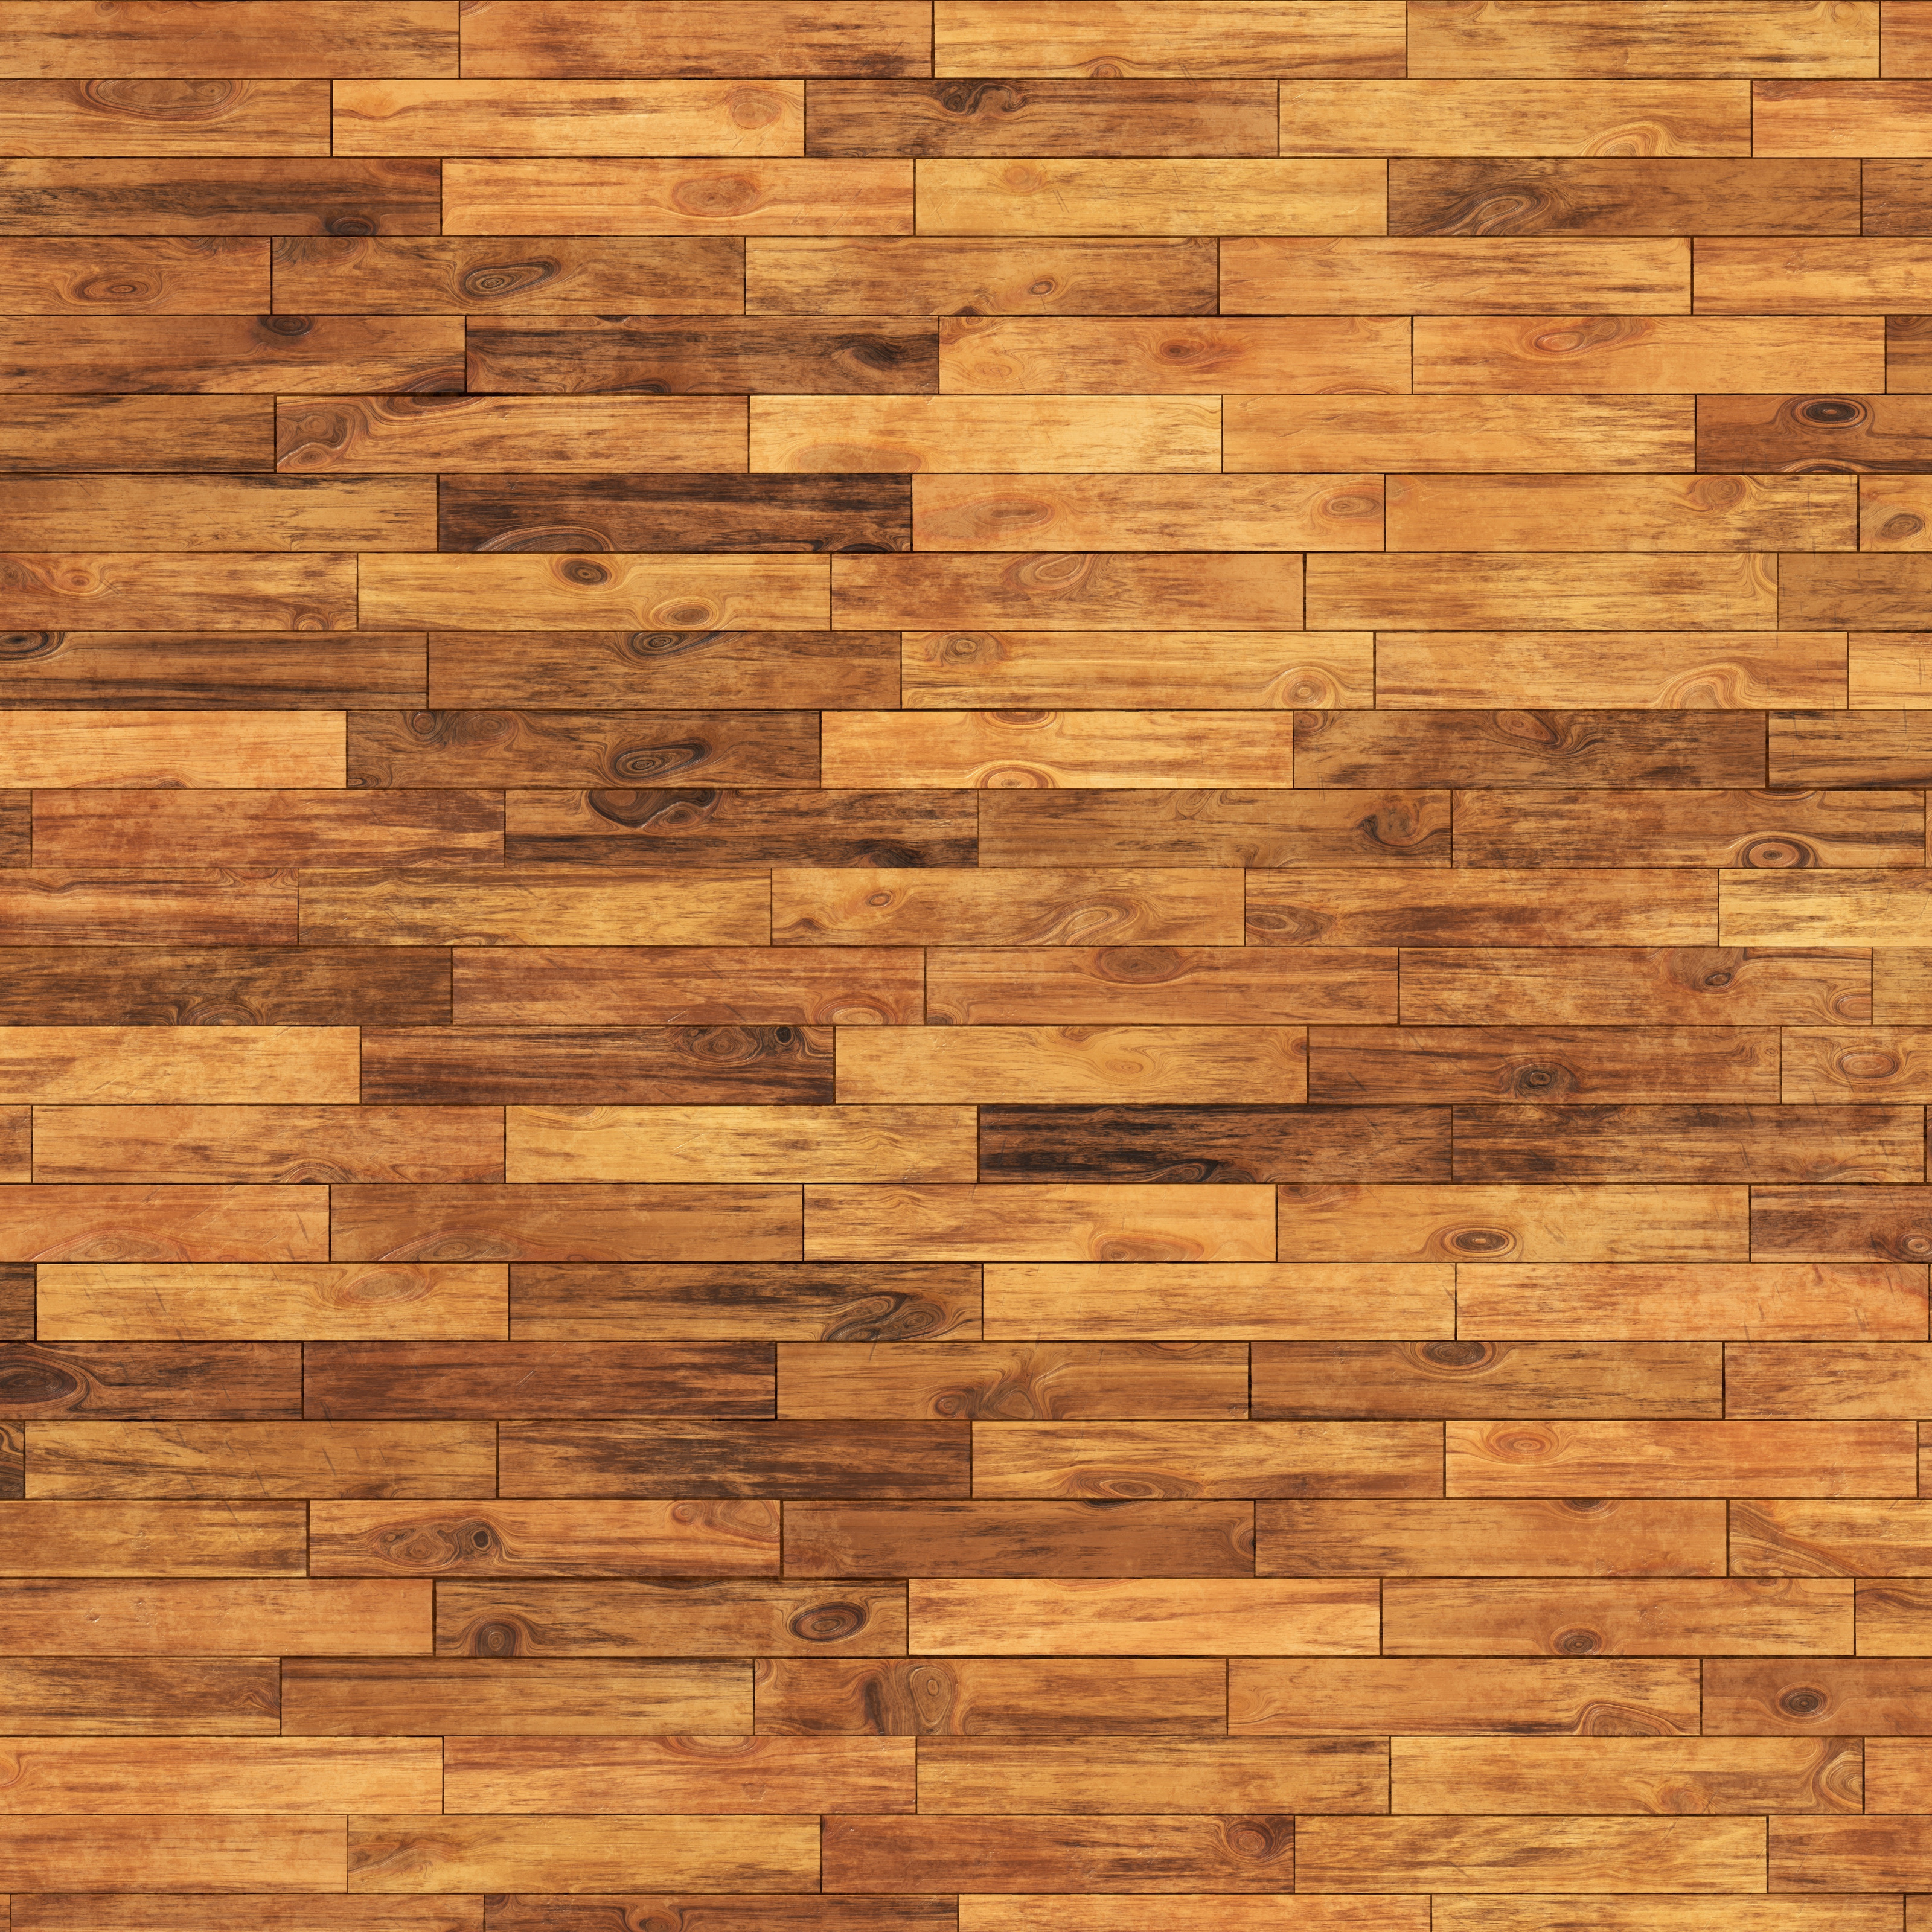 1158560 simple background, wall, wood, texture, door, floor, hardwood,  furniture, plywood, flooring, wood flooring, wood stain, laminate flooring  - Rare Gallery HD Wallpapers